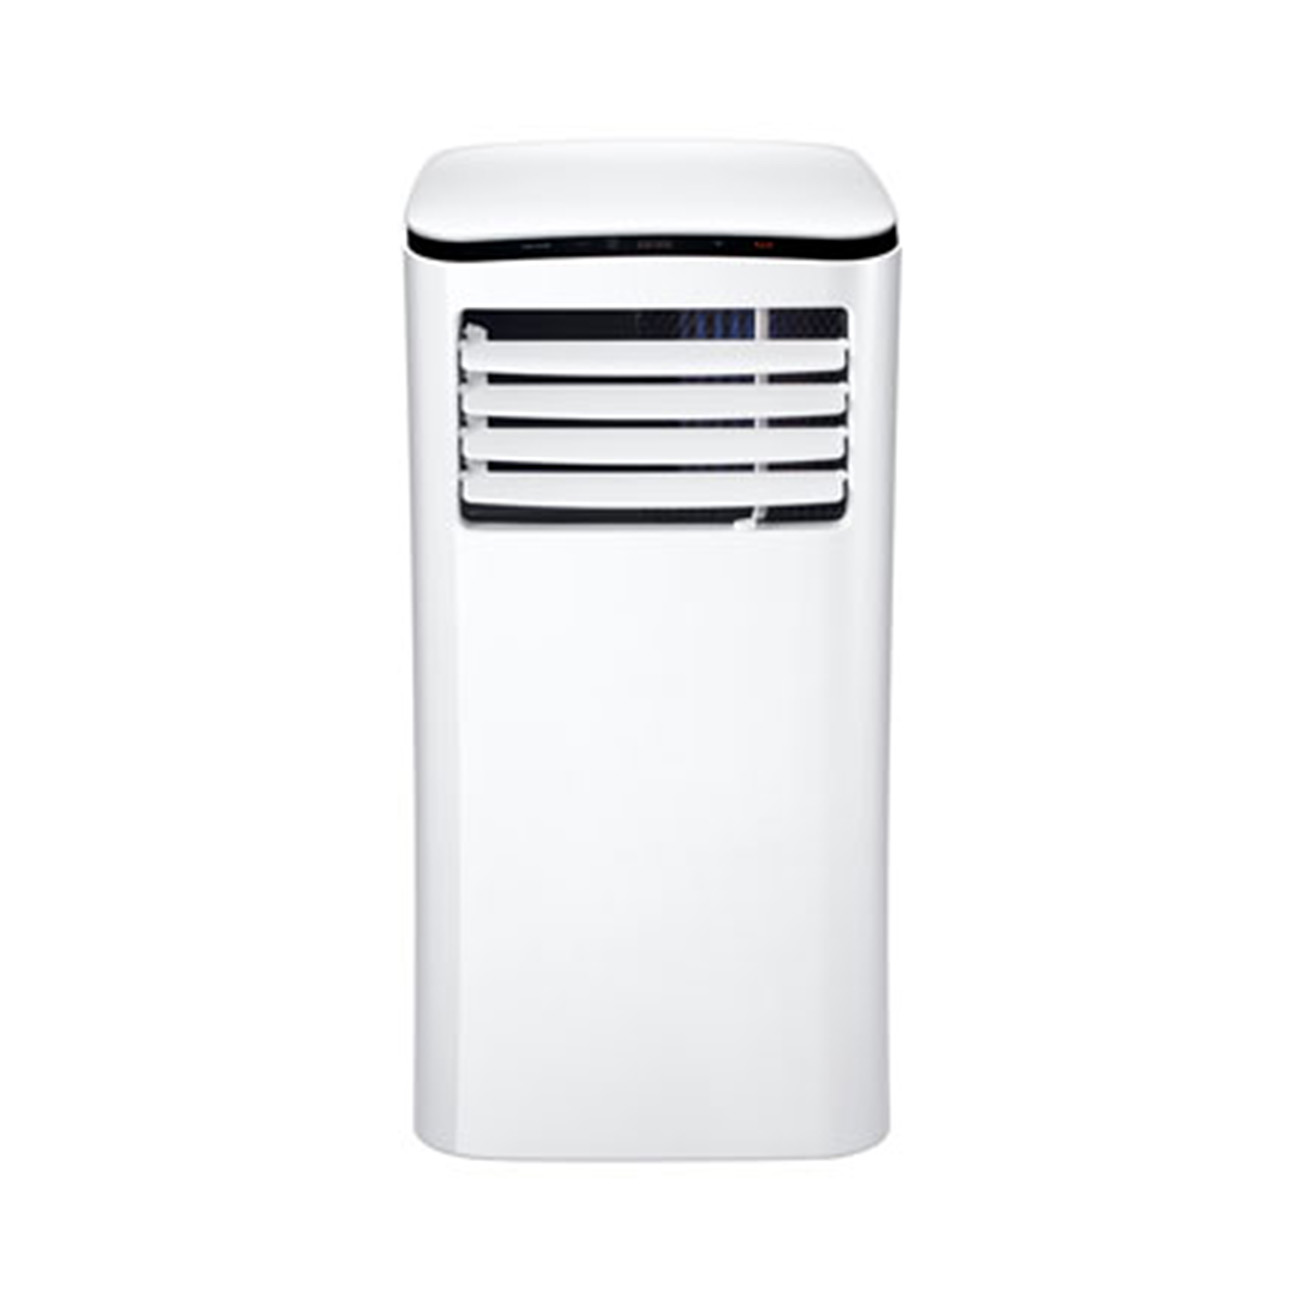 MIDEA Eco Friendly Lite Klimagerät weiß m² A+, 30 Max. Raumgröße: Energieeffizienzklasse